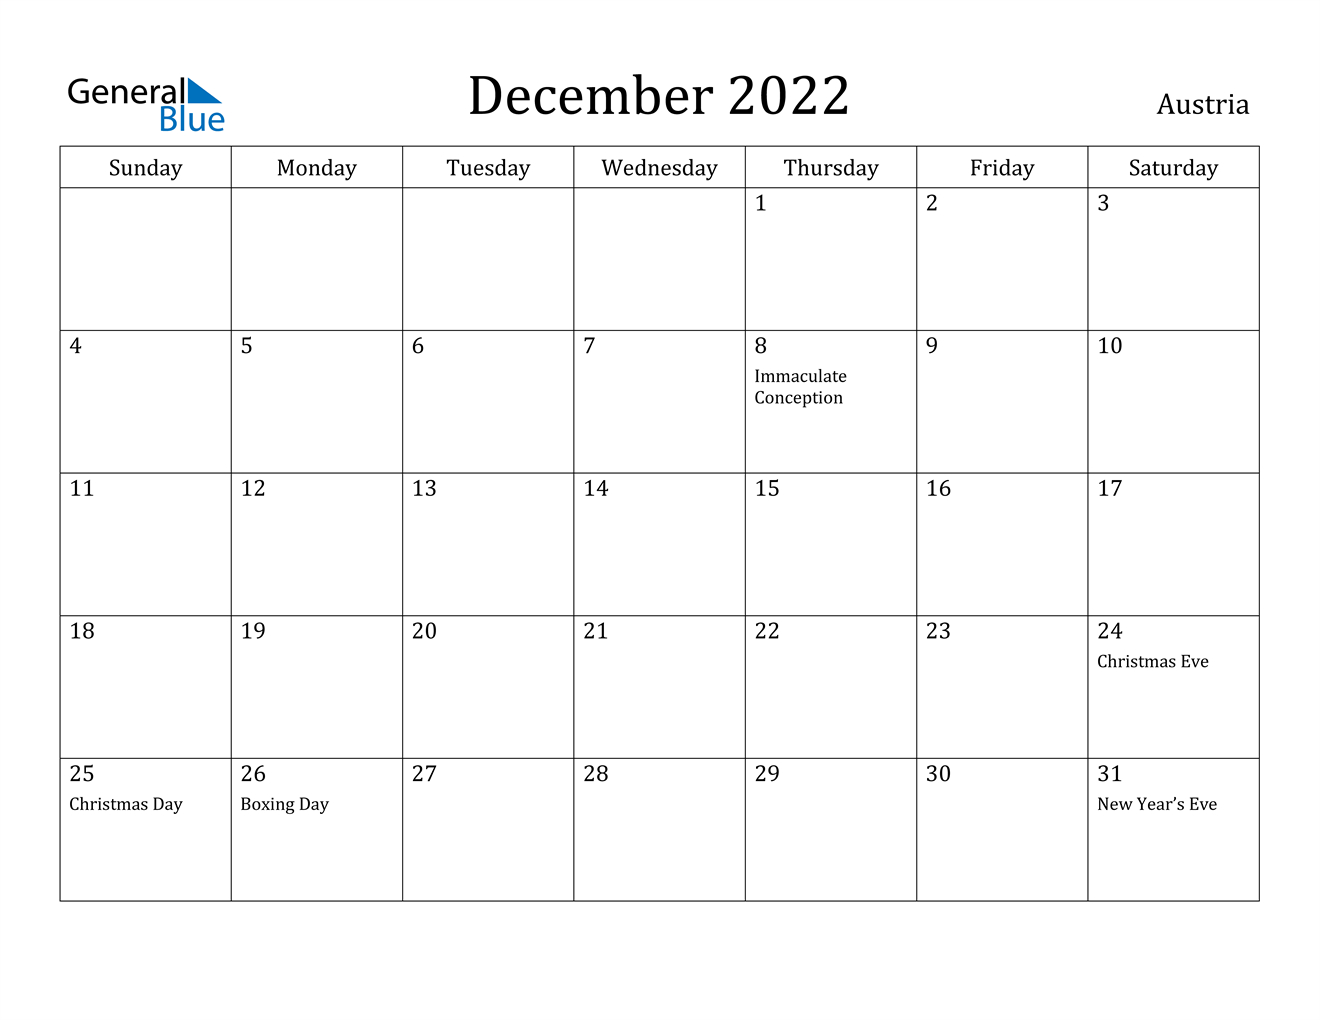 December 2022 Calendar - Austria